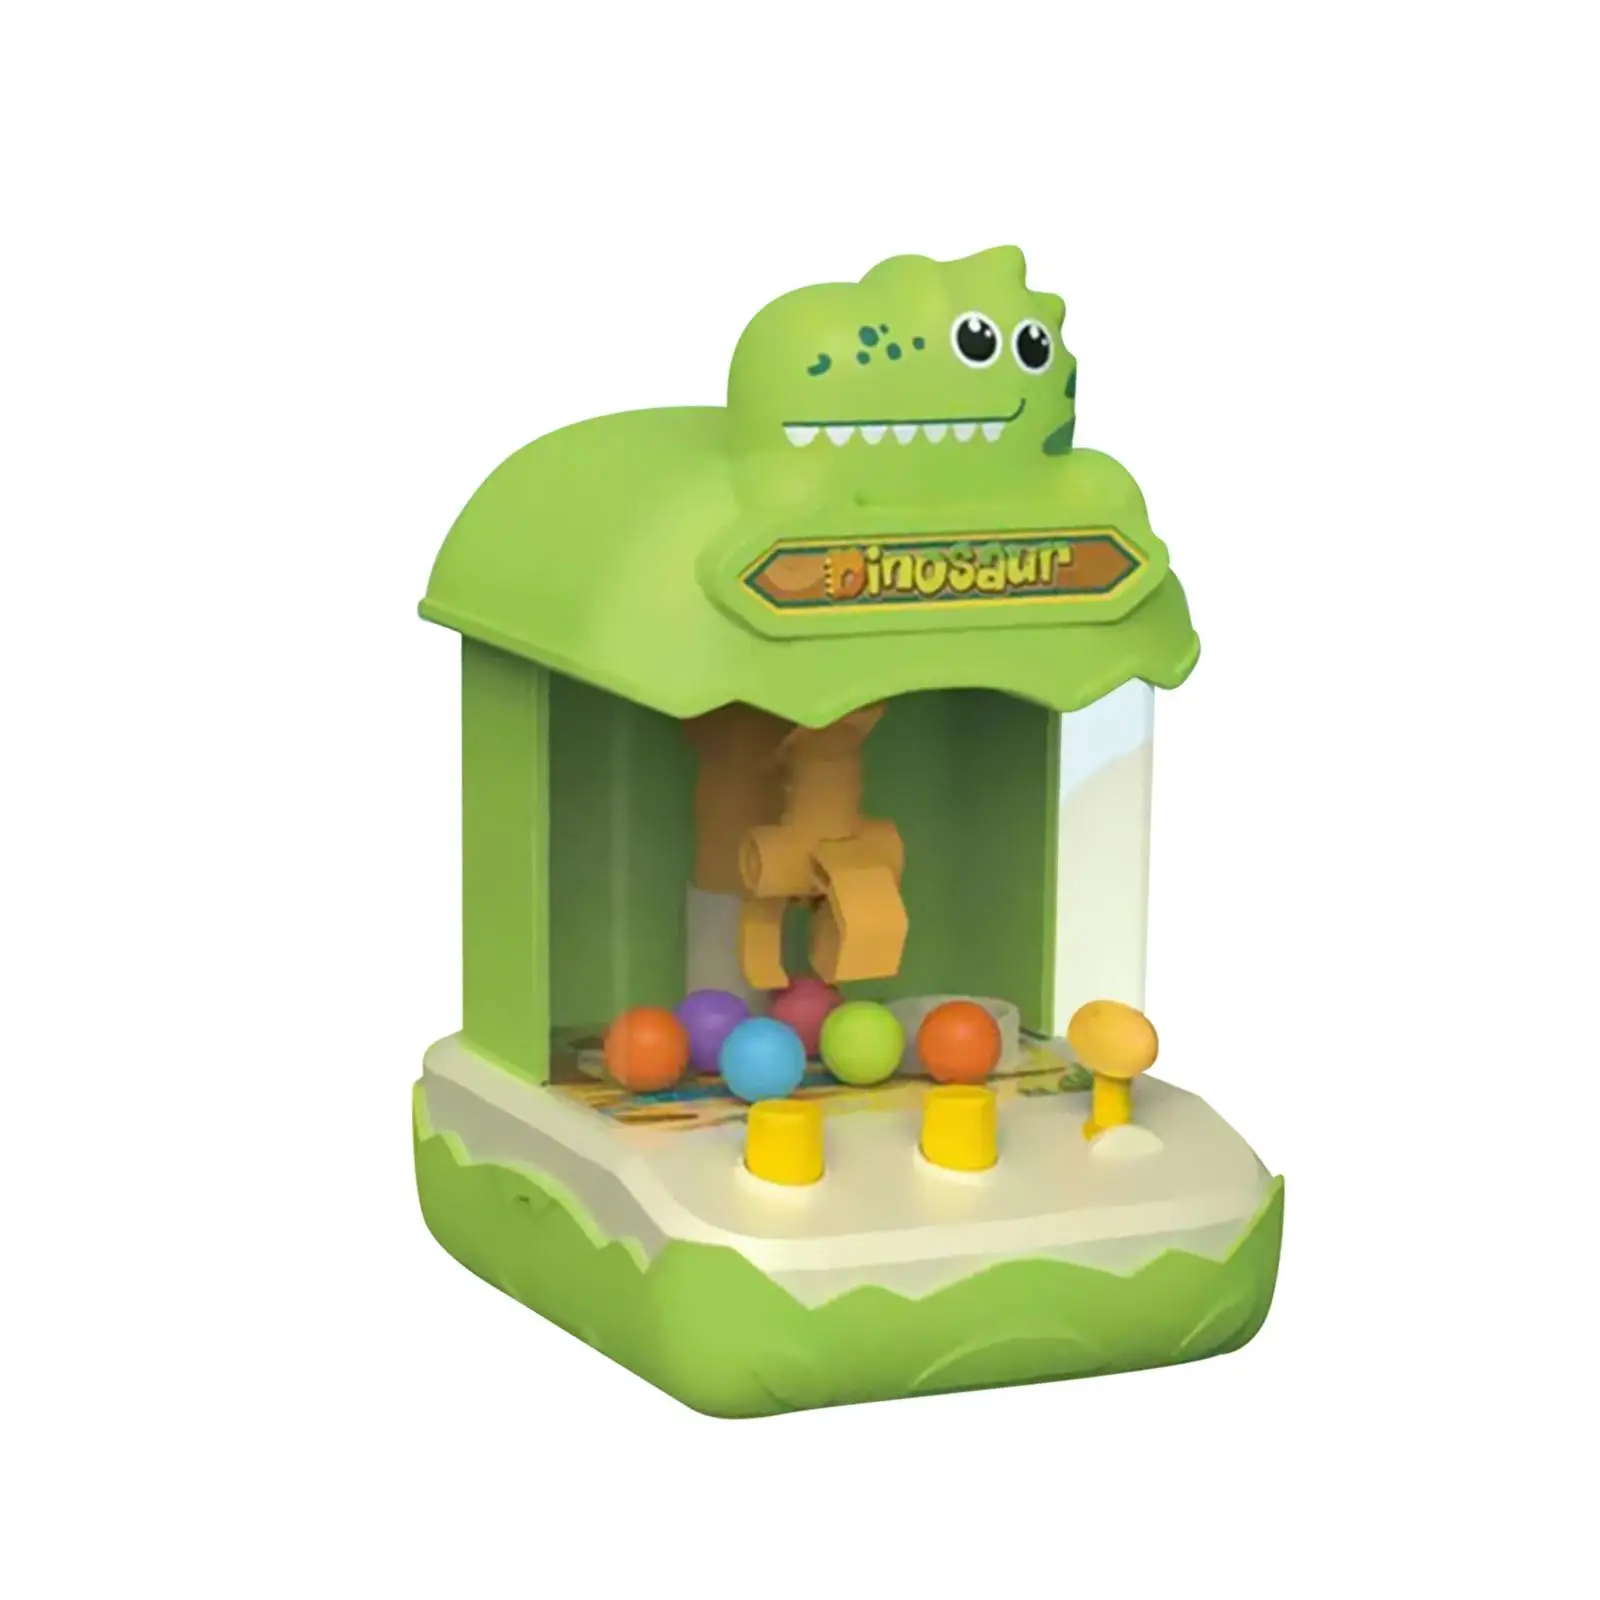 Claw Machine Candy Dispenser Toys Desktop Interactive Toys for Best Gifts Parent Child Interactive Children